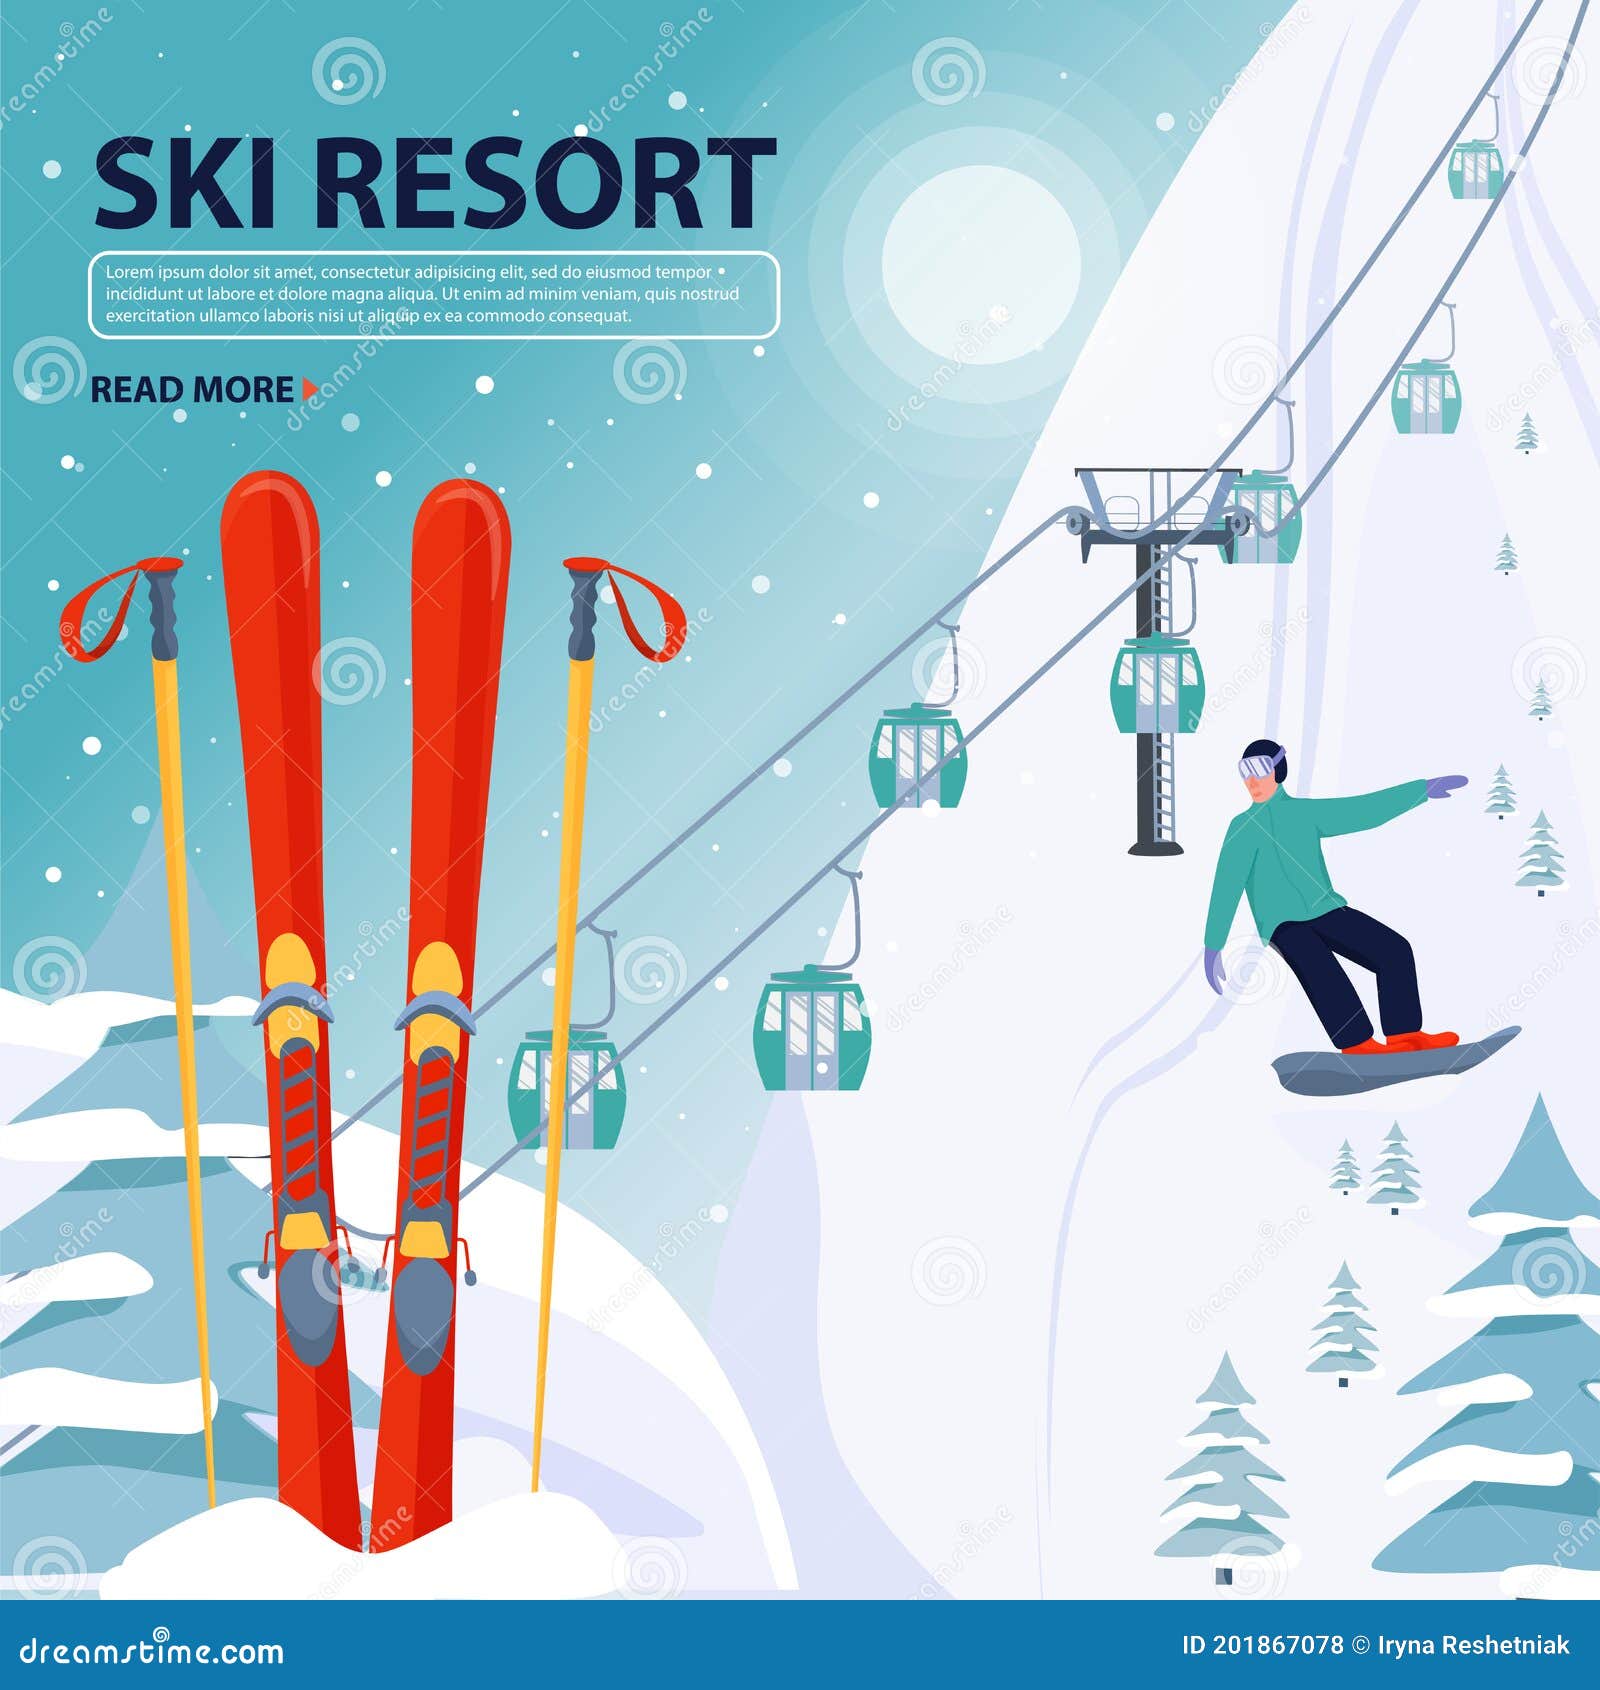 Ski Resort Banner Illustration with Ski Lift and Equipment. Stock ...